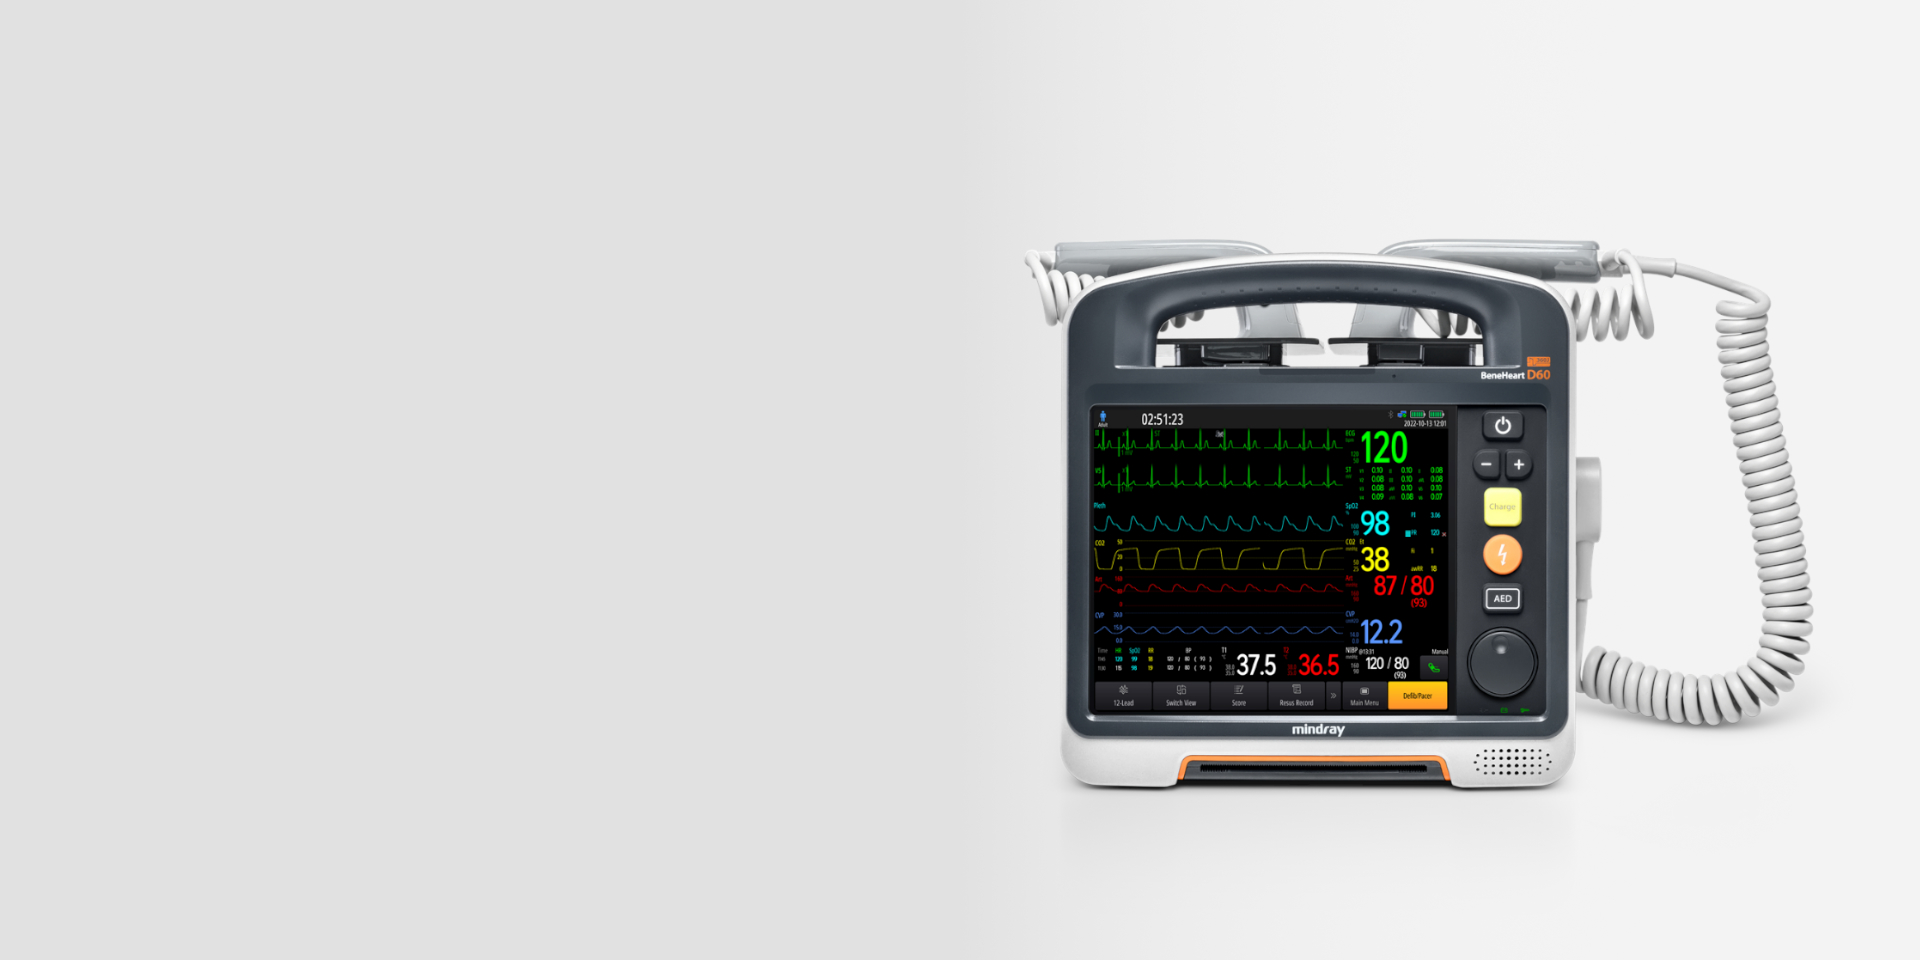 defibrillation-system-s3-pc